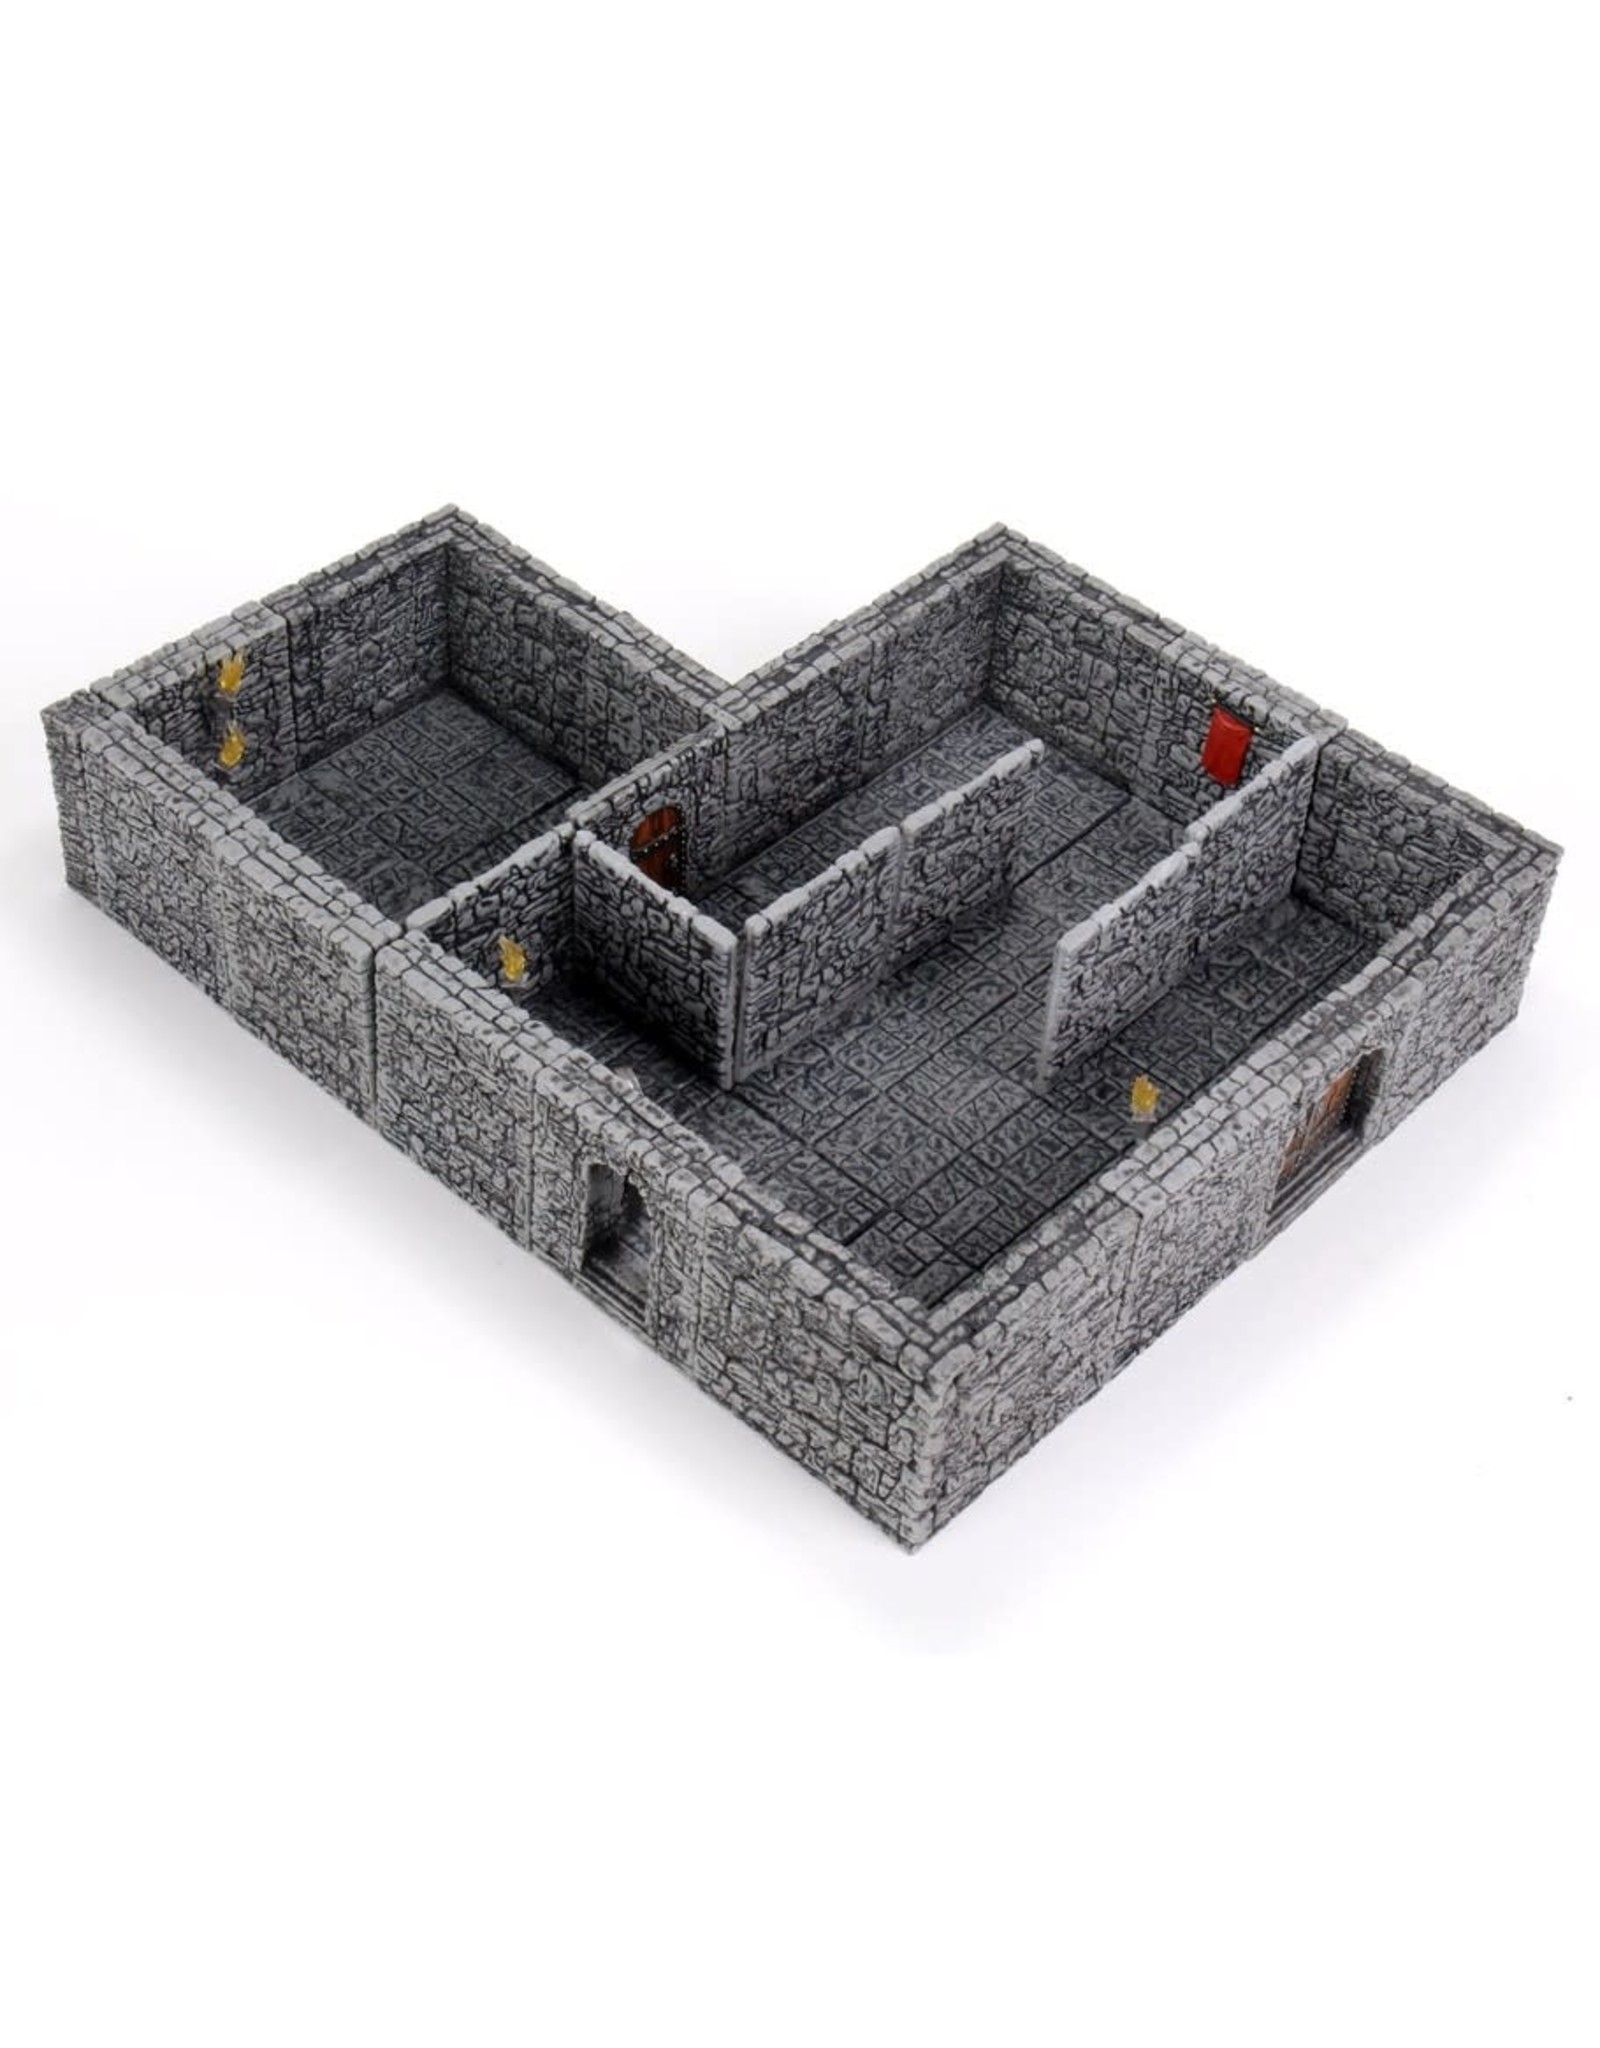 Wizkids WarLock Tiles: Dungeon Tiles II - Full Height Stone Walls Expansion